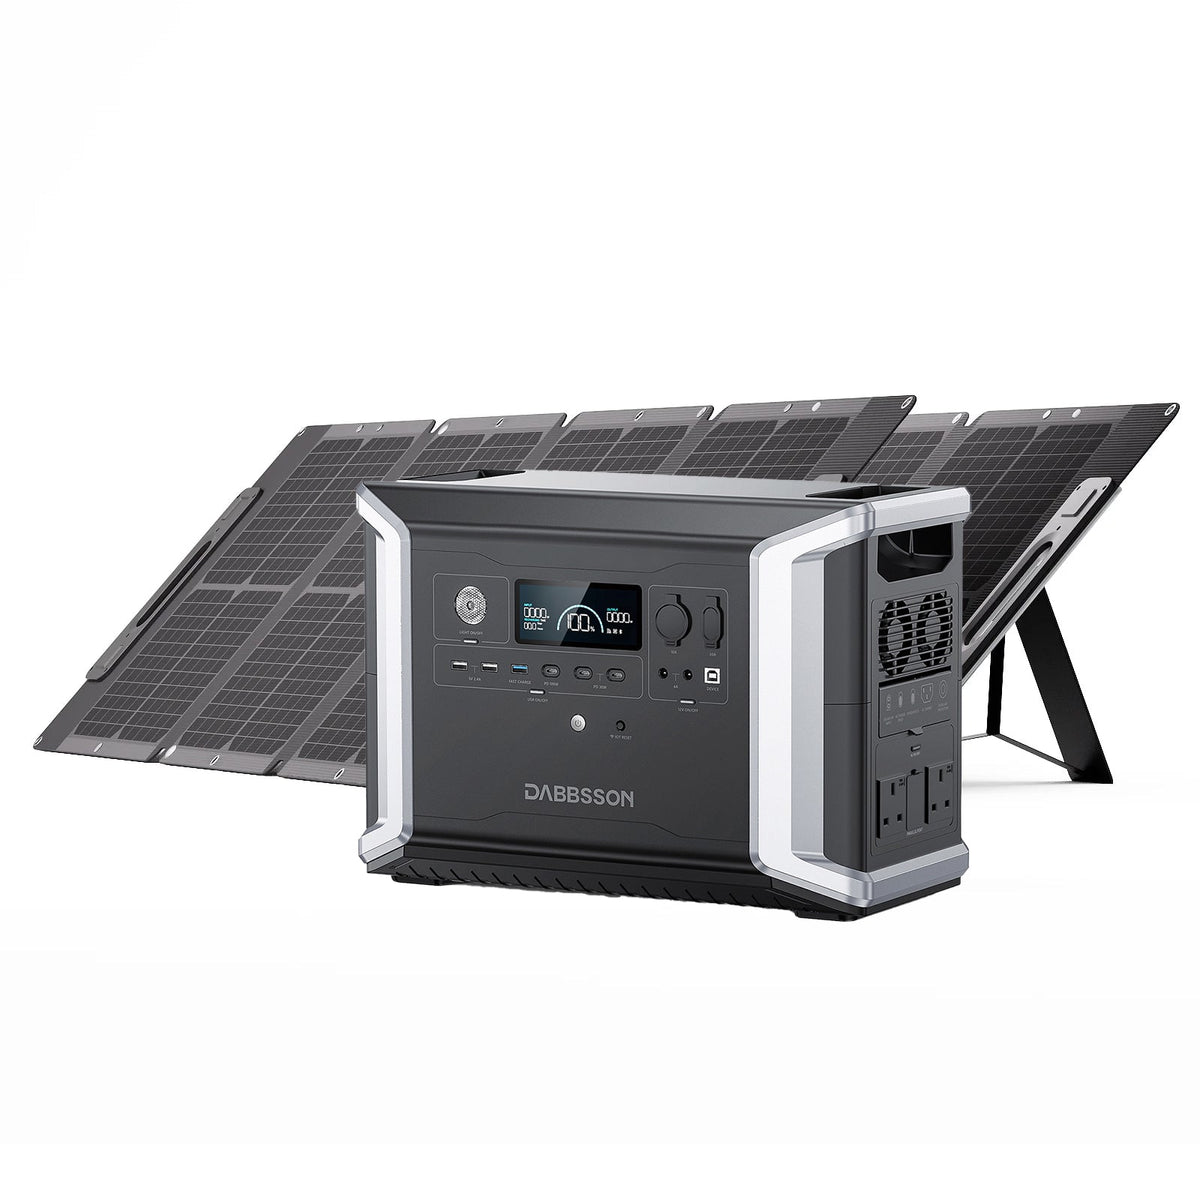 DBS2300 + DBS210S | 2200W 2330Wh 210W Solar-Kit